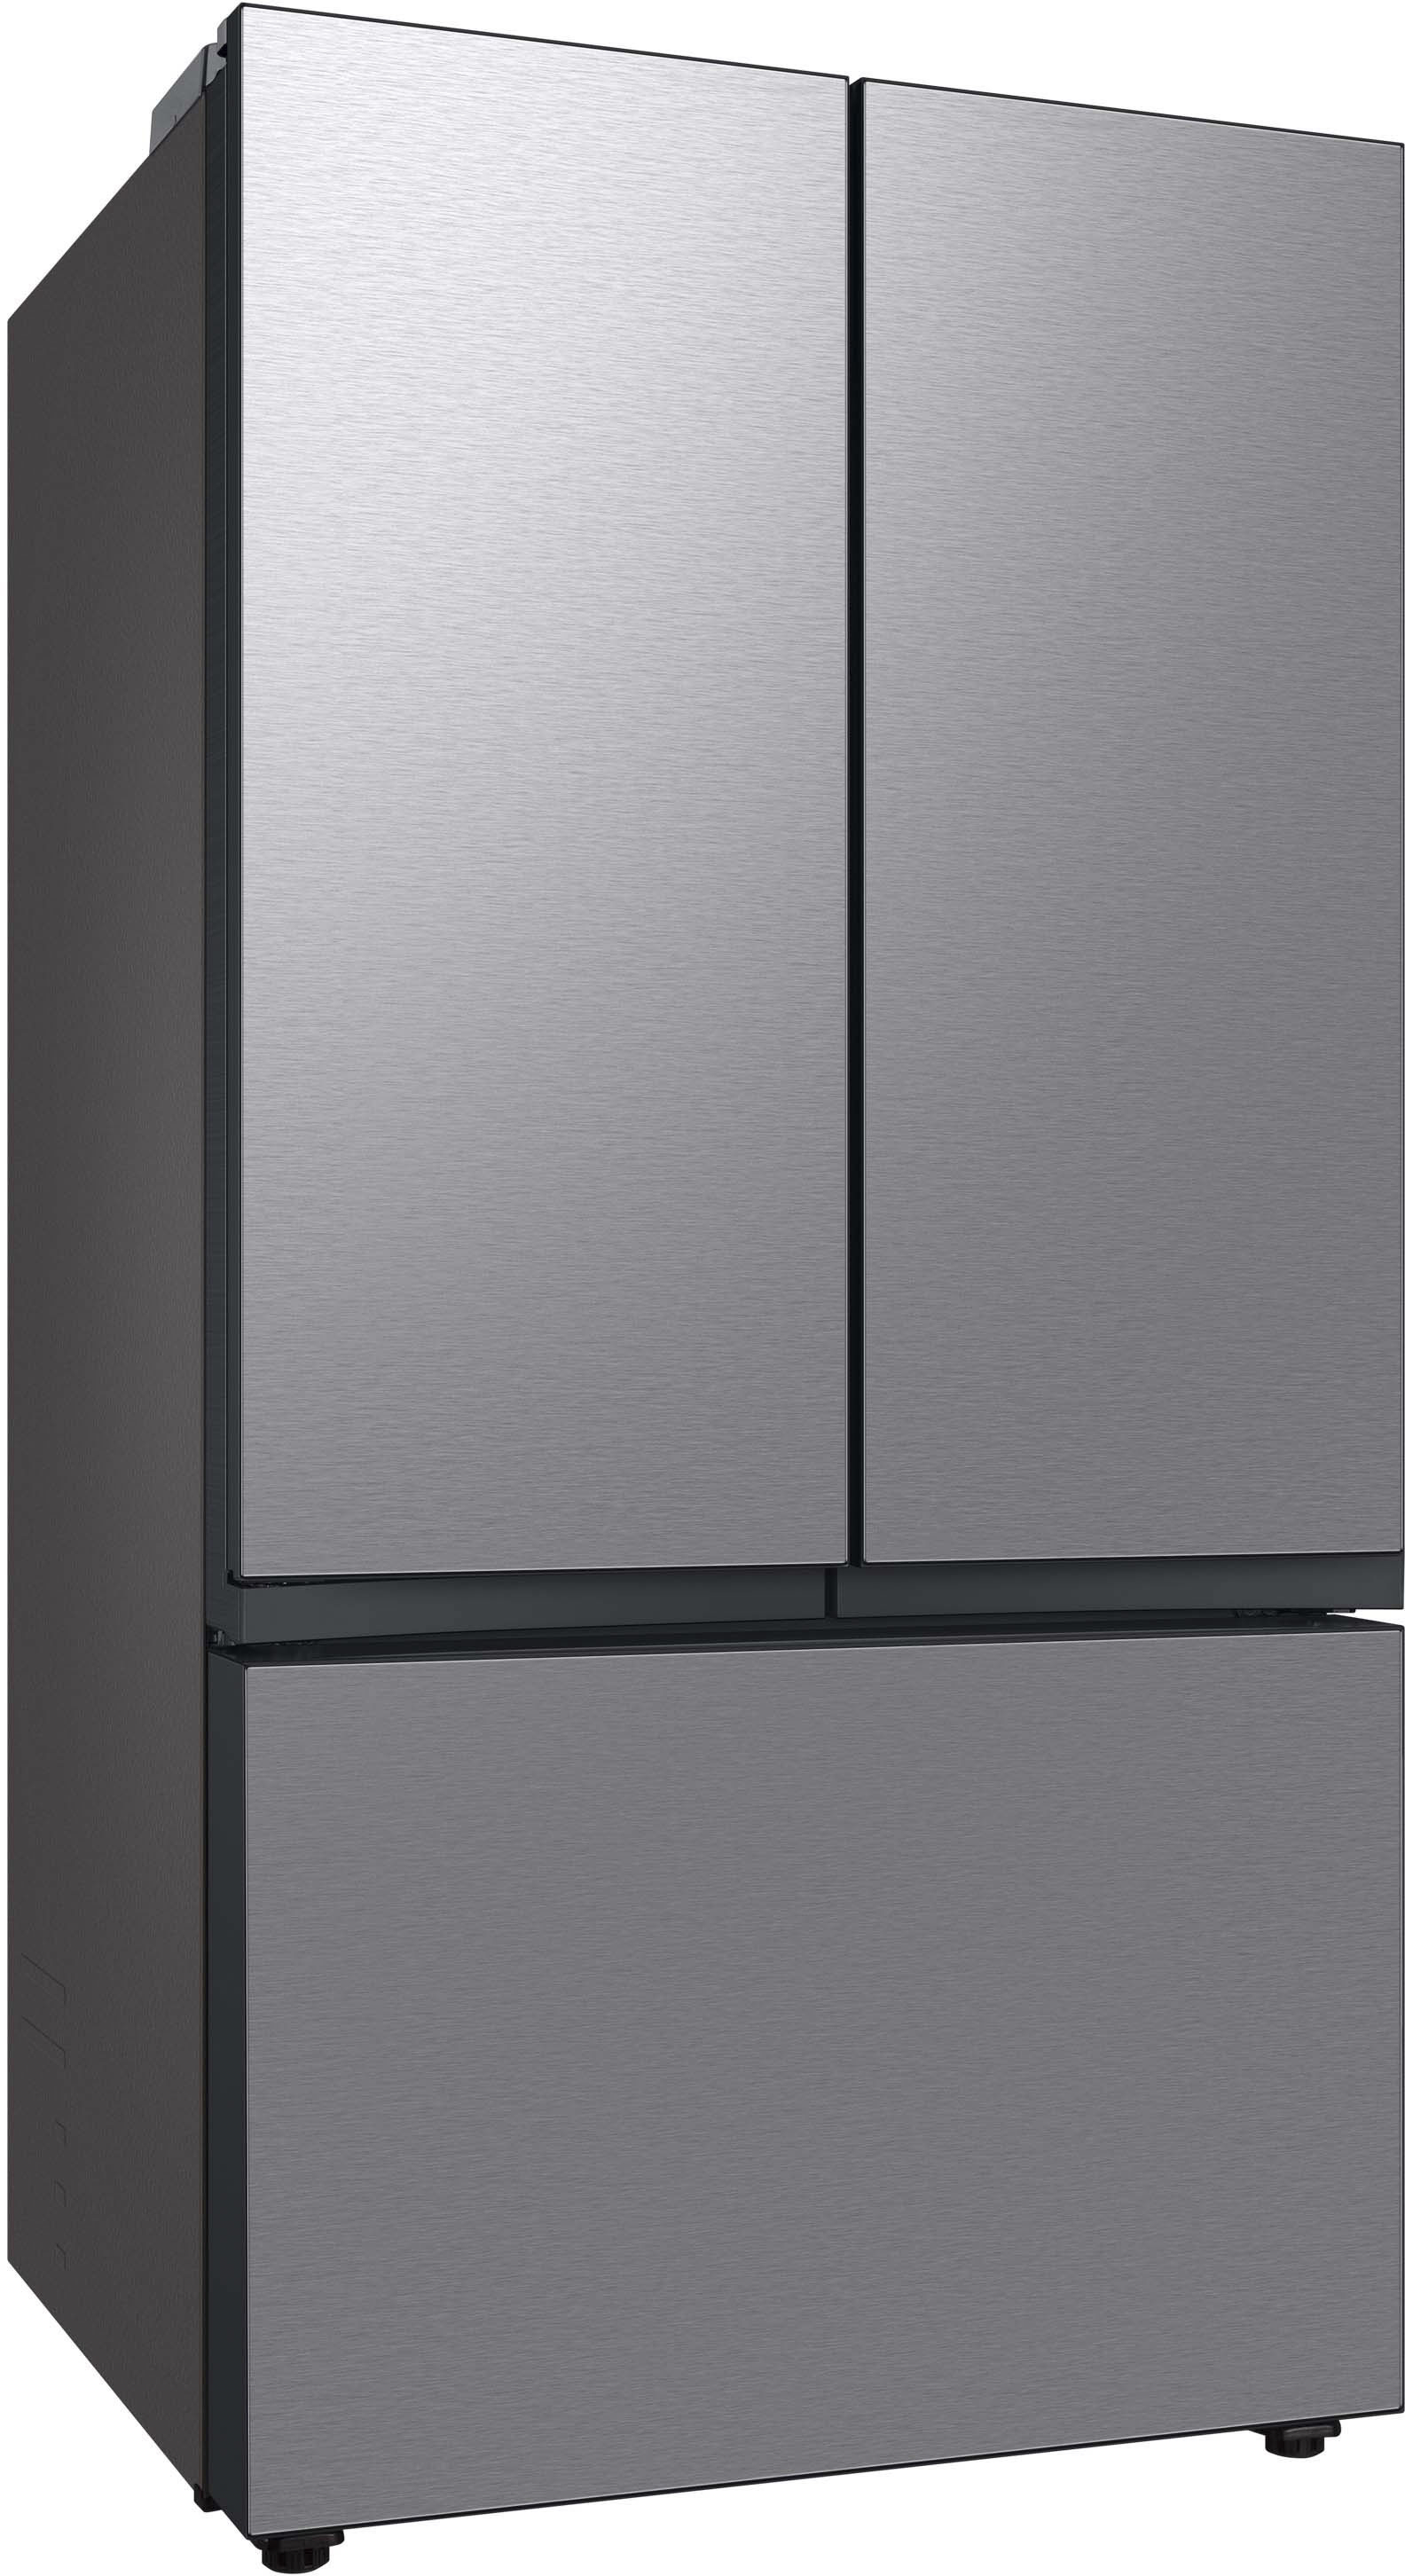 Bespoke 3-Door French Door Refrigerator (30 cu. ft.) – with Top Left and  Family Hub™ Panel in White Glass - and Matte Grey Glass Bottom Door Panel